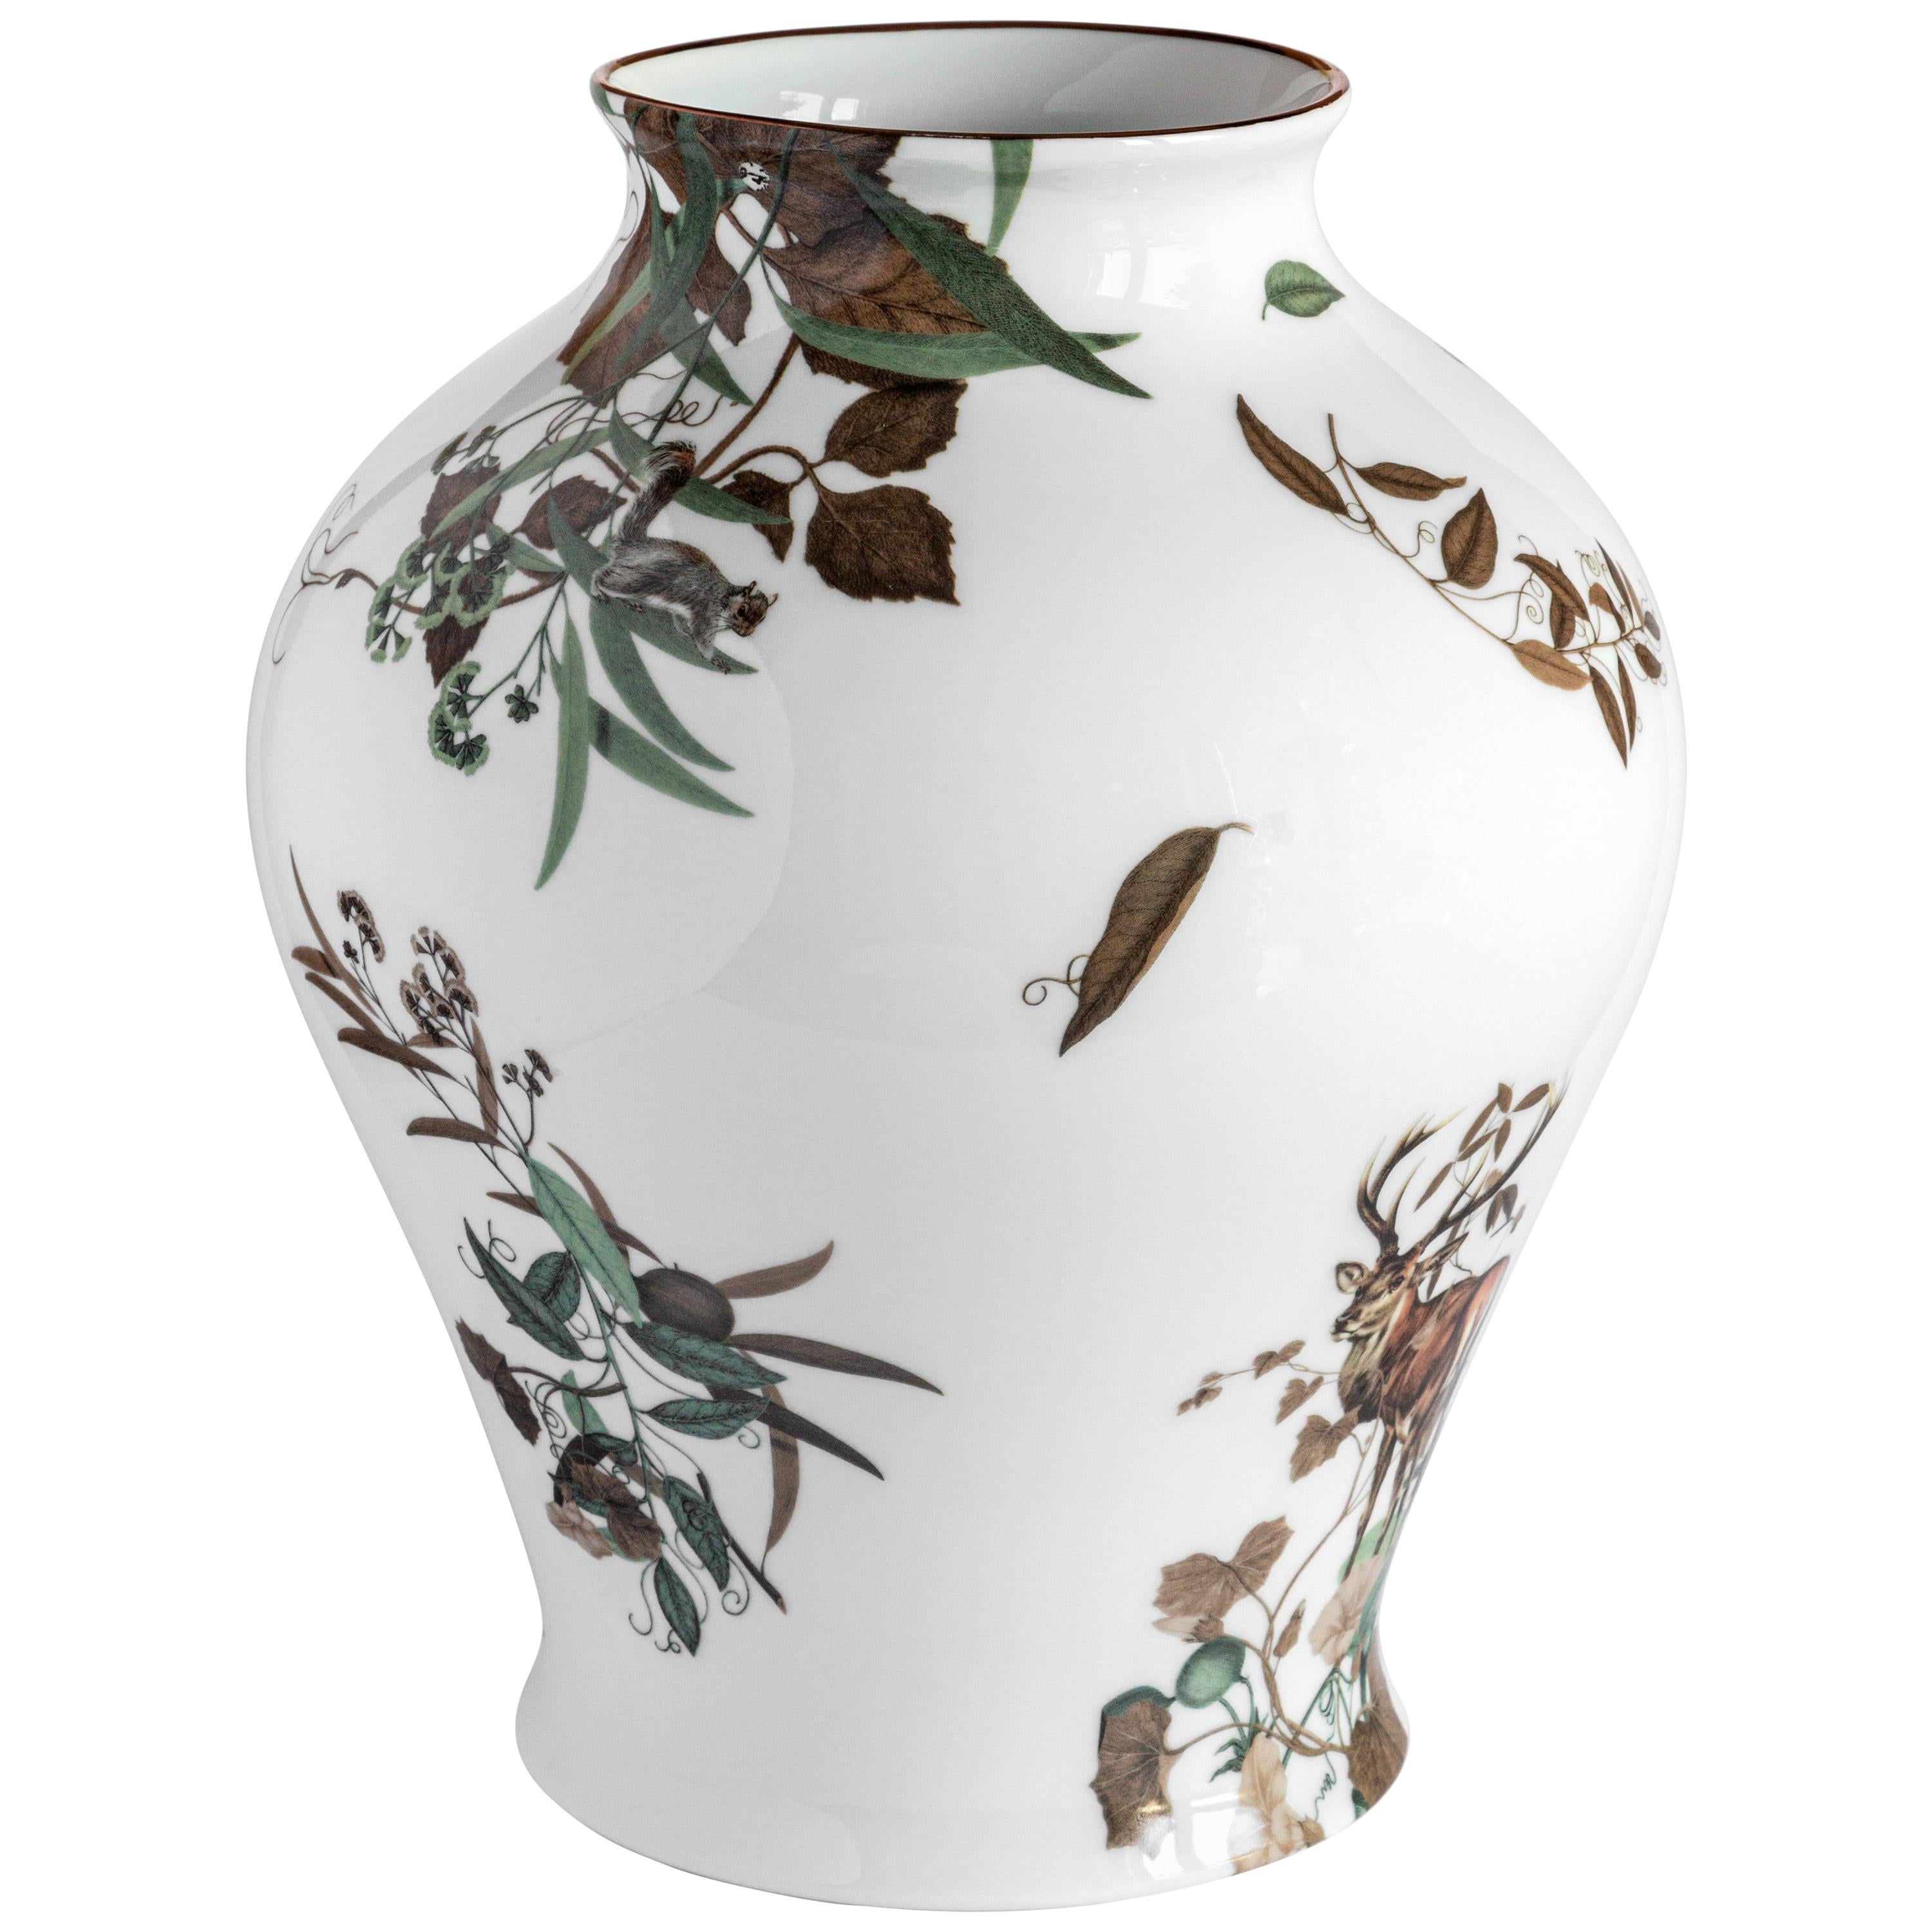 Mont Blanc, Contemporary Porcelain Vase with Decorative Design by Vito Nesta